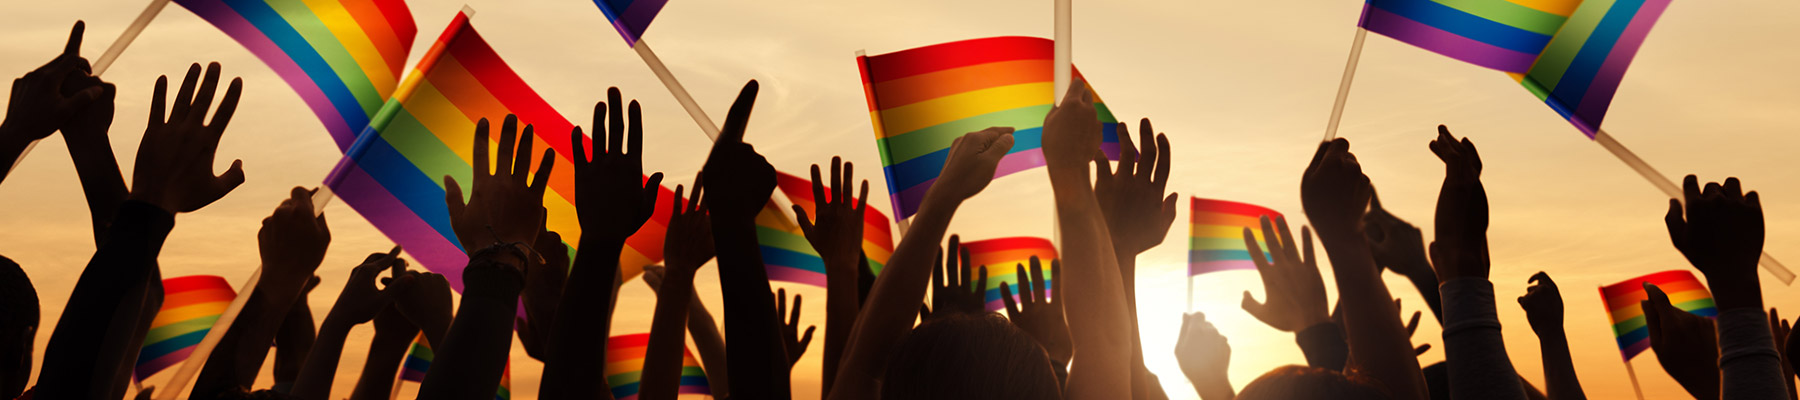 Unity Pride: A Gay Men’s Spirituality Group